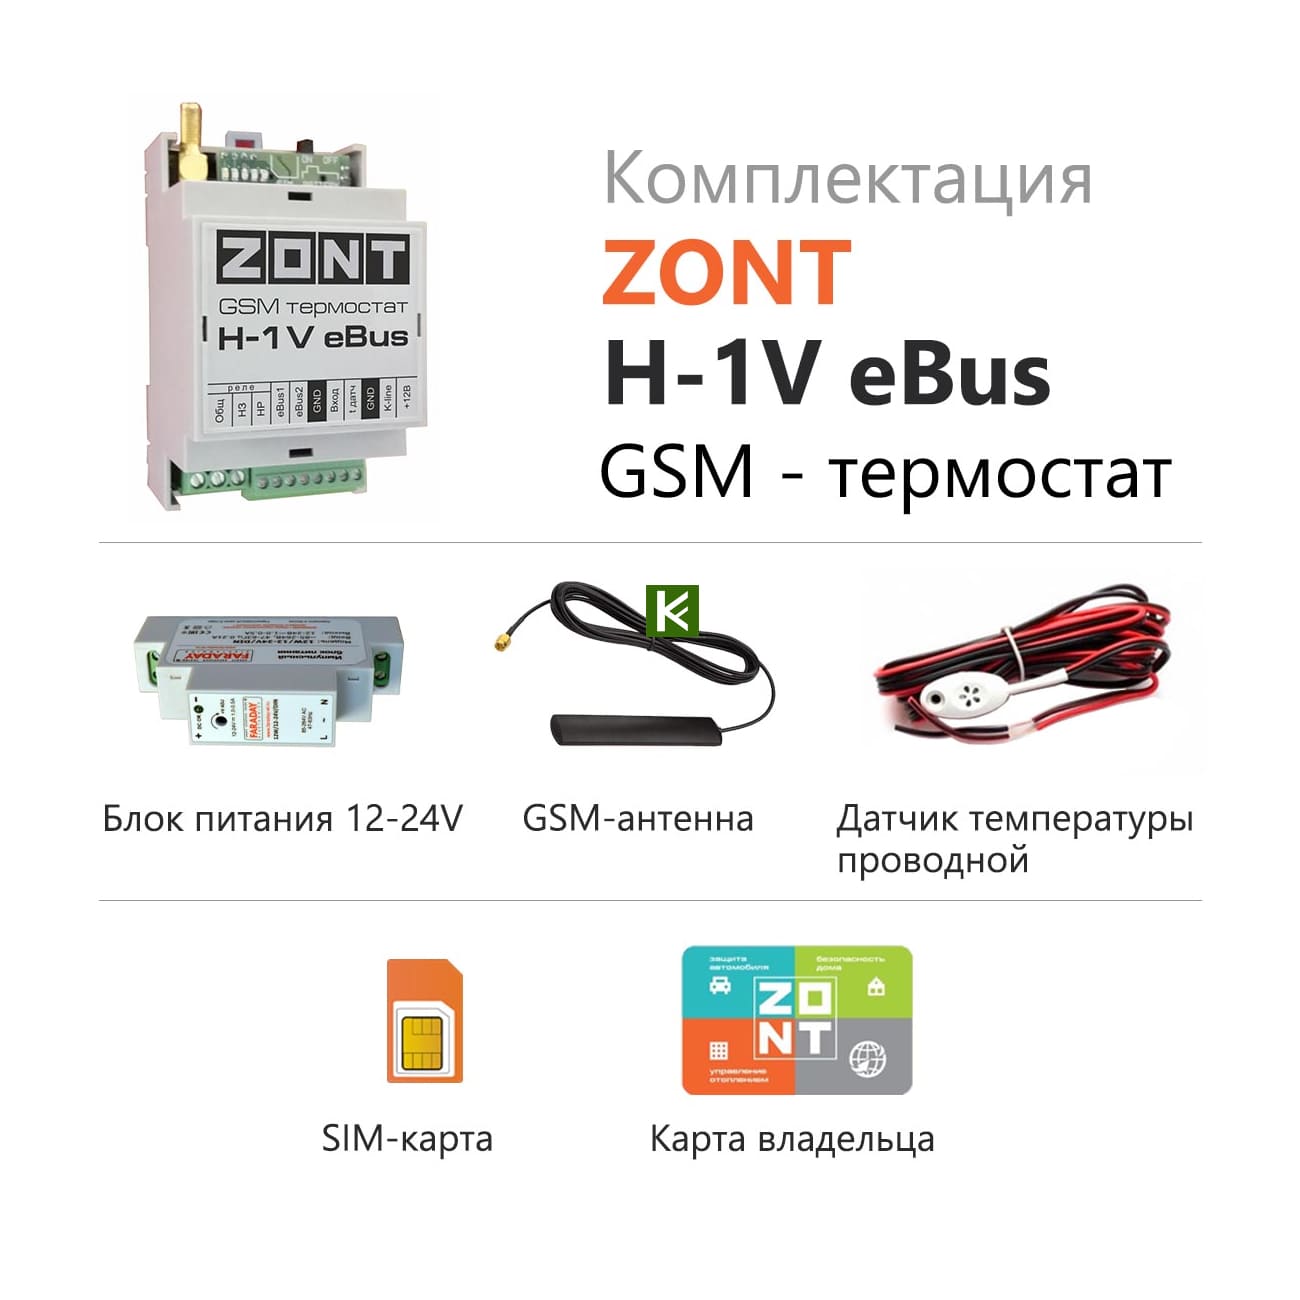 Подключения zont h 1v. Zont-h1v EBUS GSM-термостат. GSM-термостат Zont h-1. GSM-термостат Zont h-1v. GSM термостат Zont h-1v e-Bus.